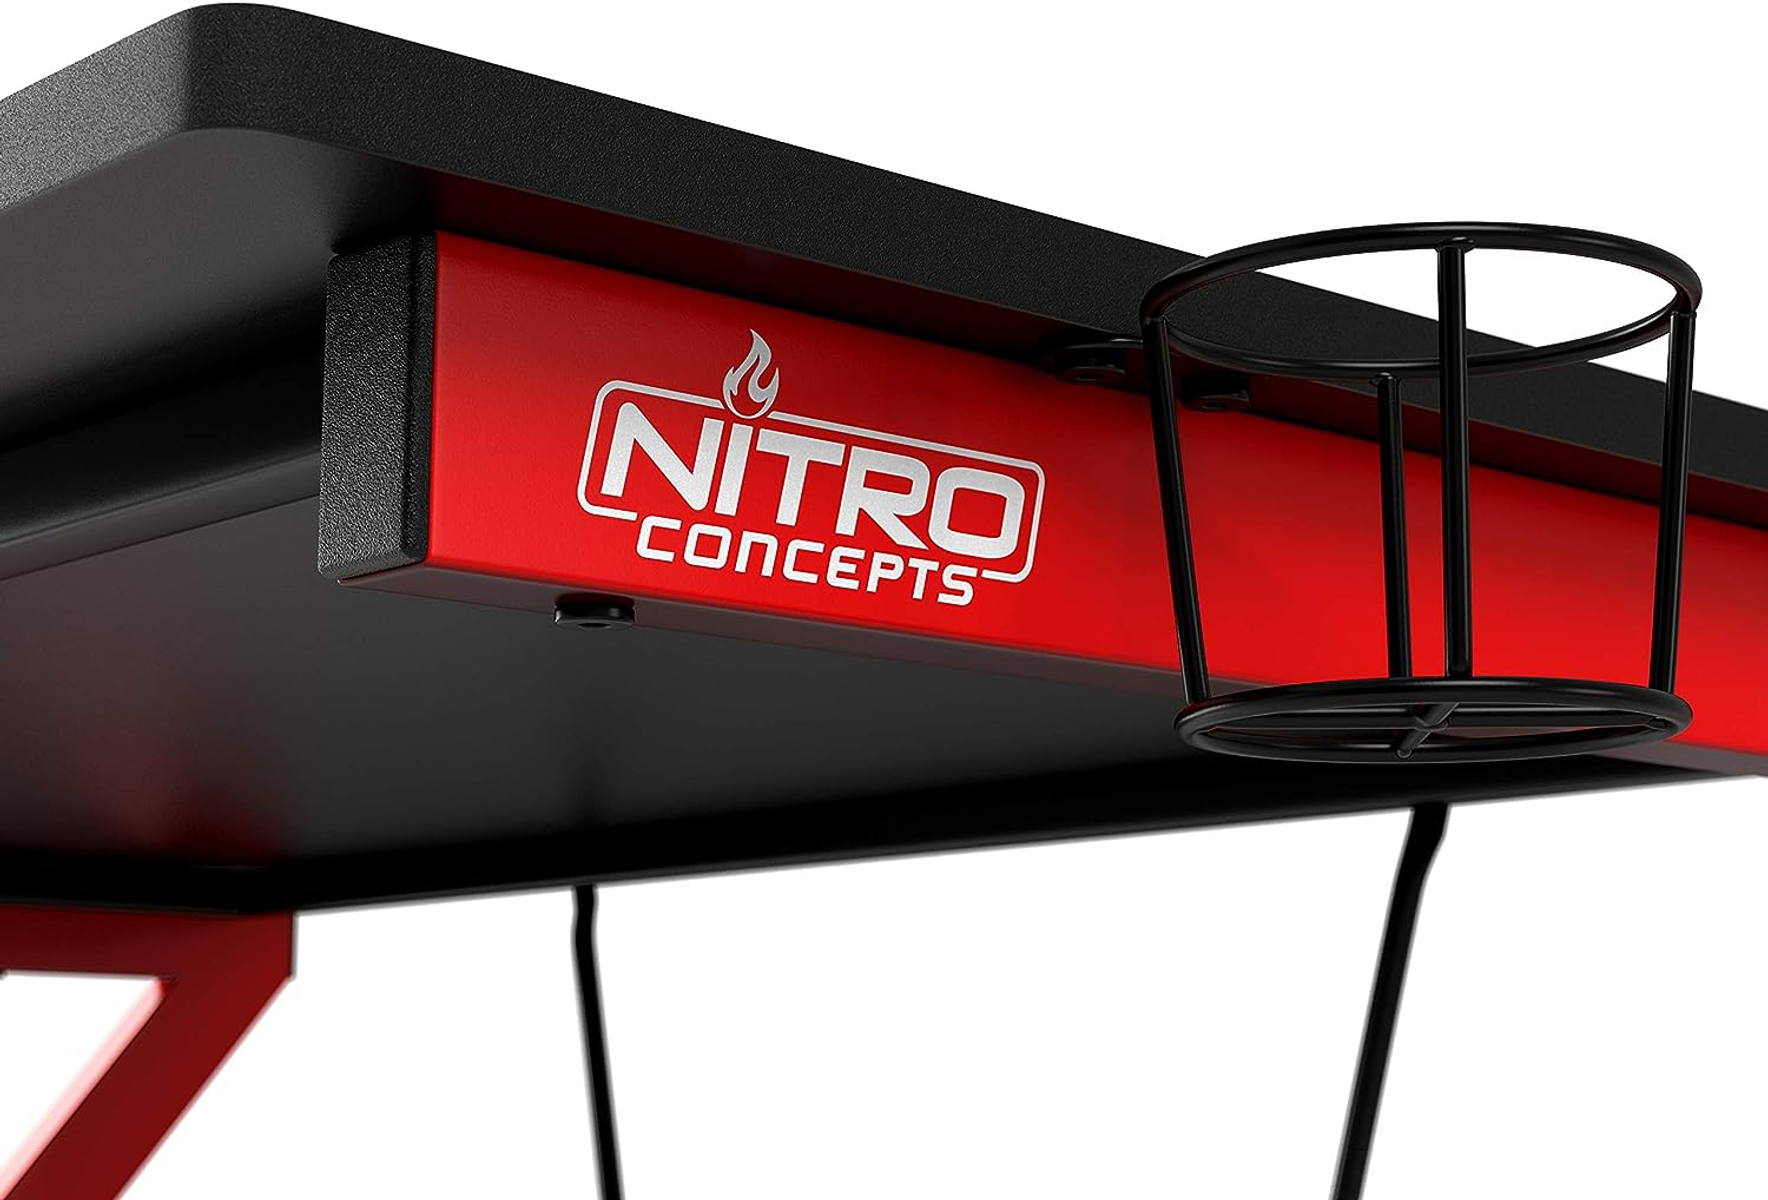 NITRO CONCEPTS NC-GP-DK-010 Tisch Gaming